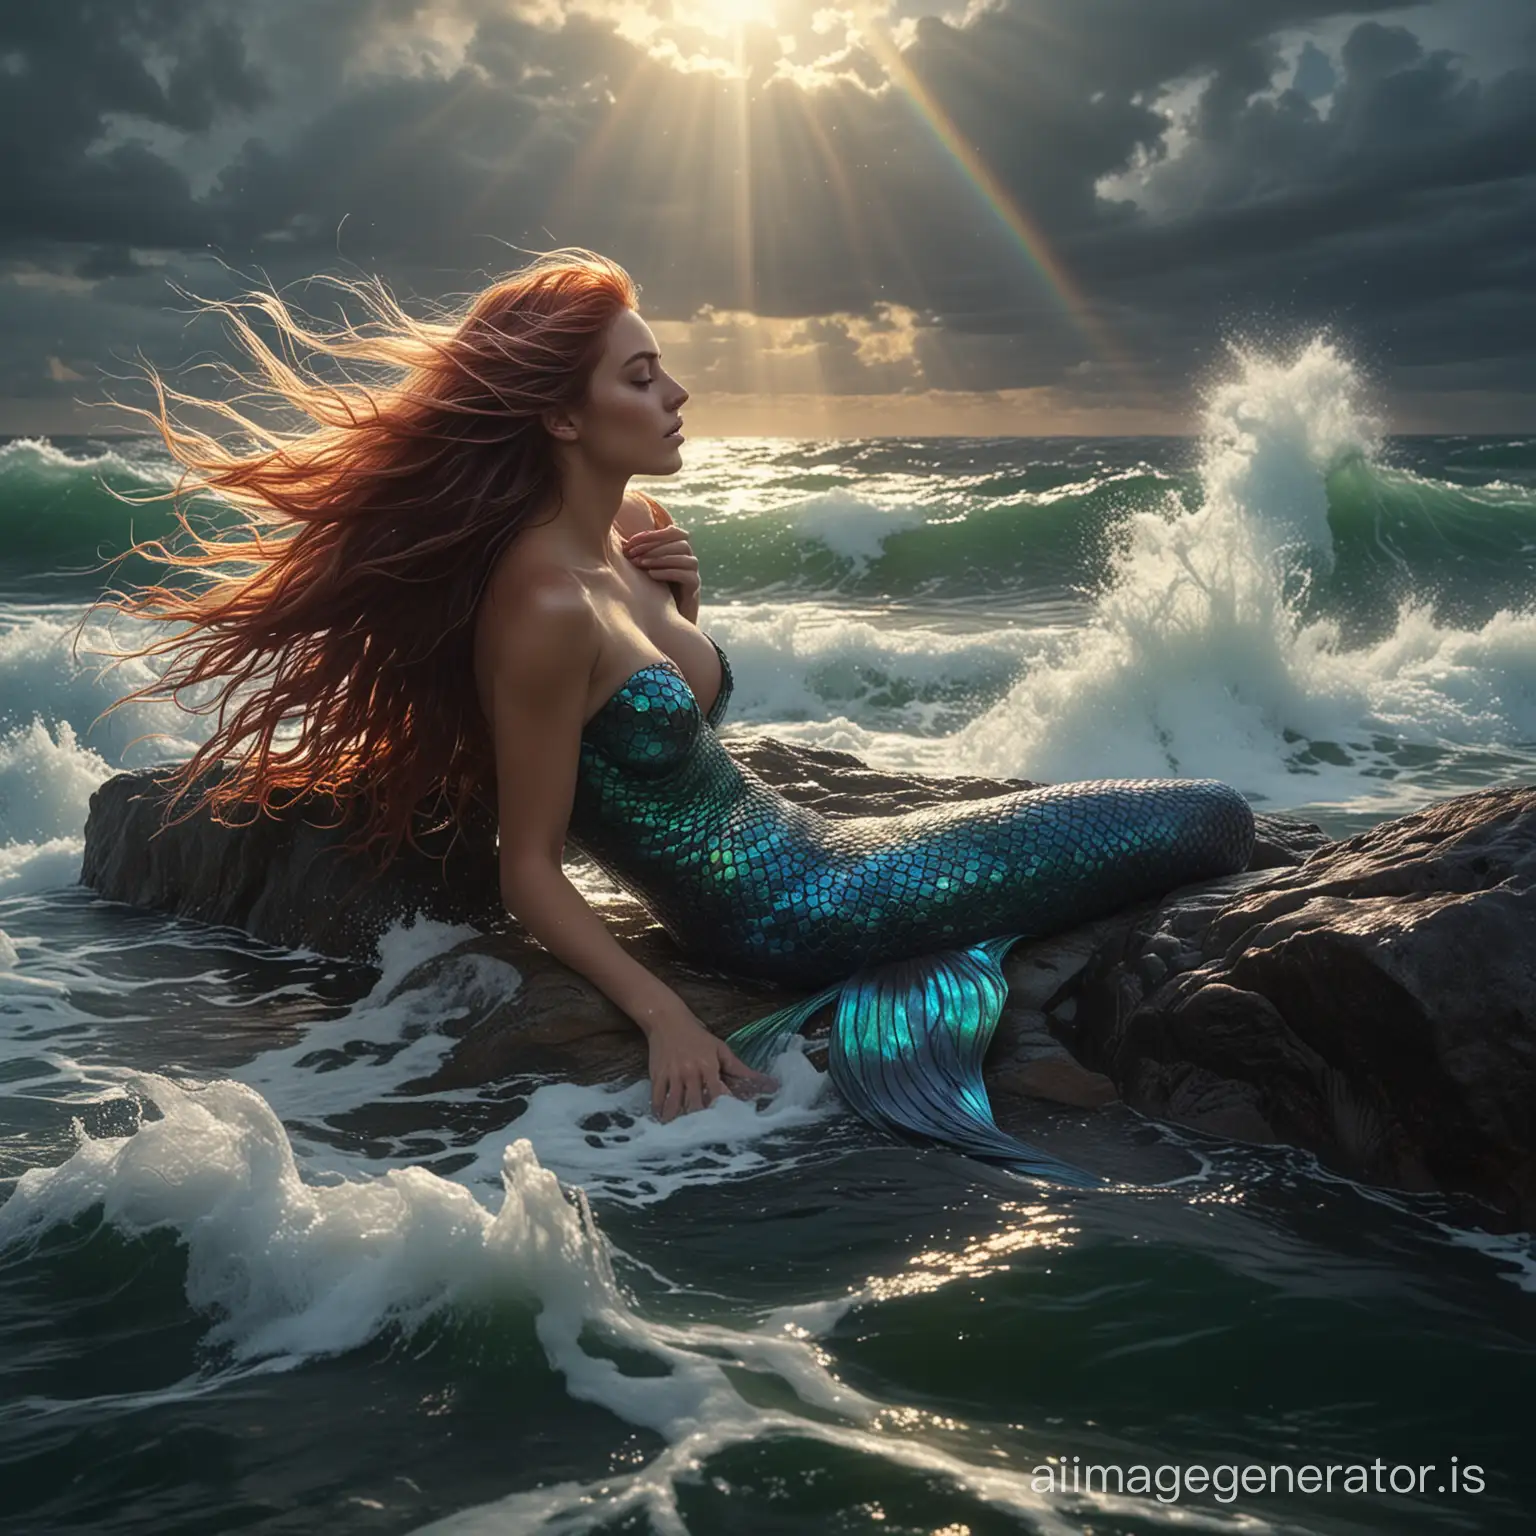 Iridescent-Mermaid-Resting-on-Sunlit-Rock-Amidst-Turbulent-Sea-Waves